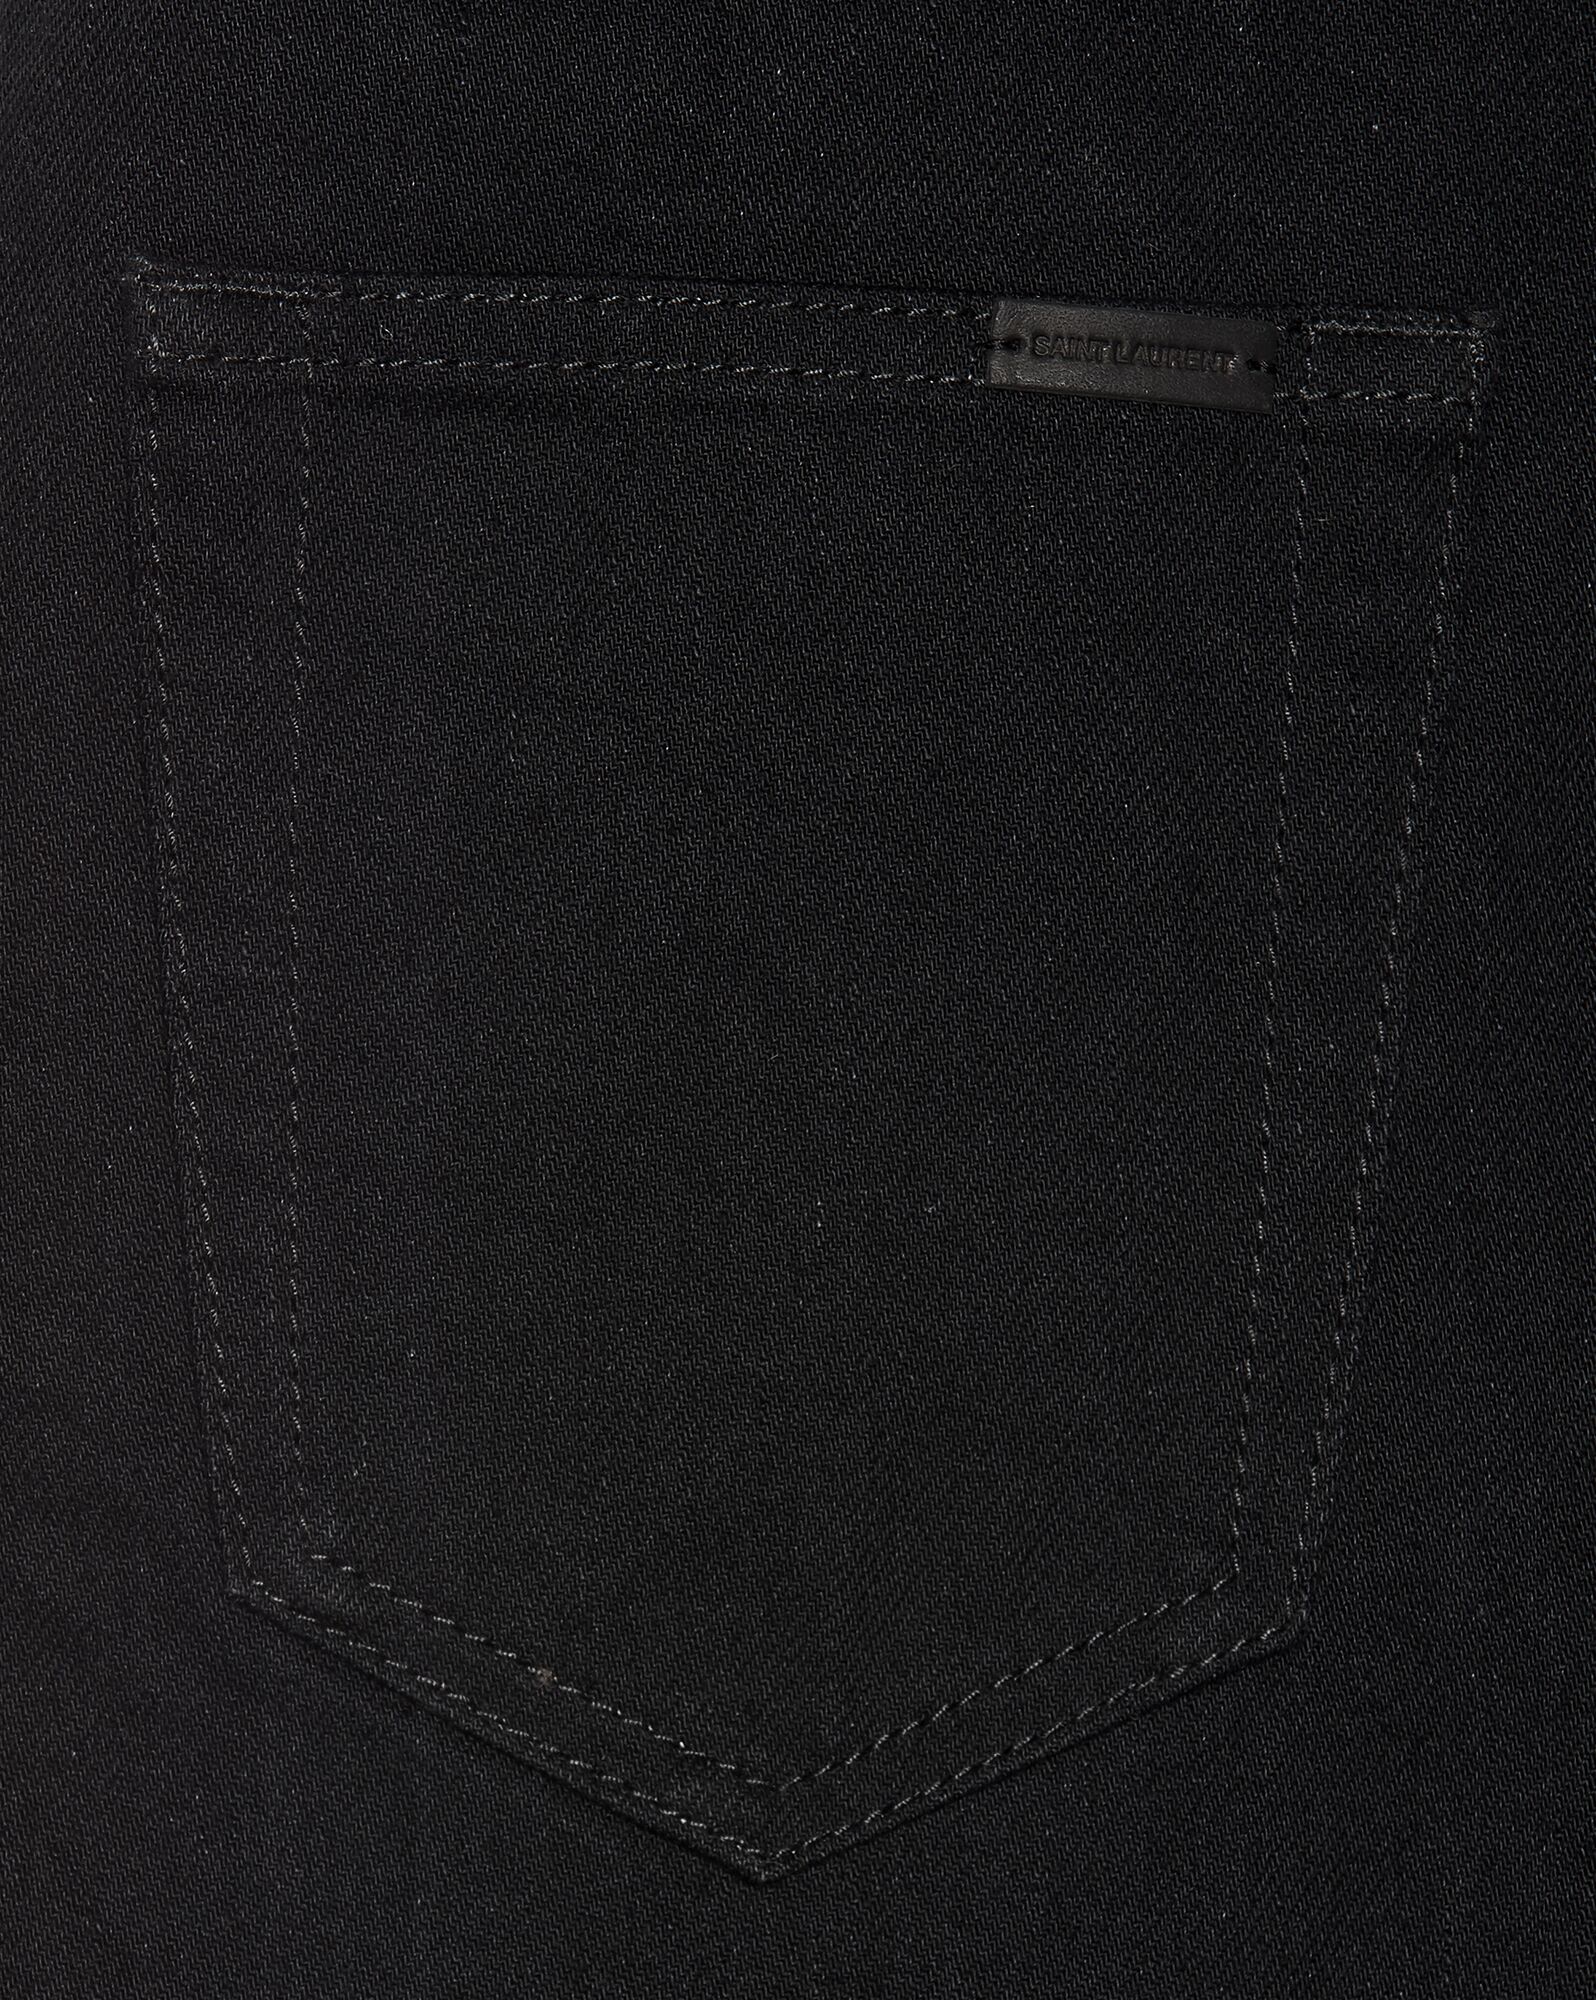 Slim-fit jeans in worn black denim | Saint Laurent | YSL.com